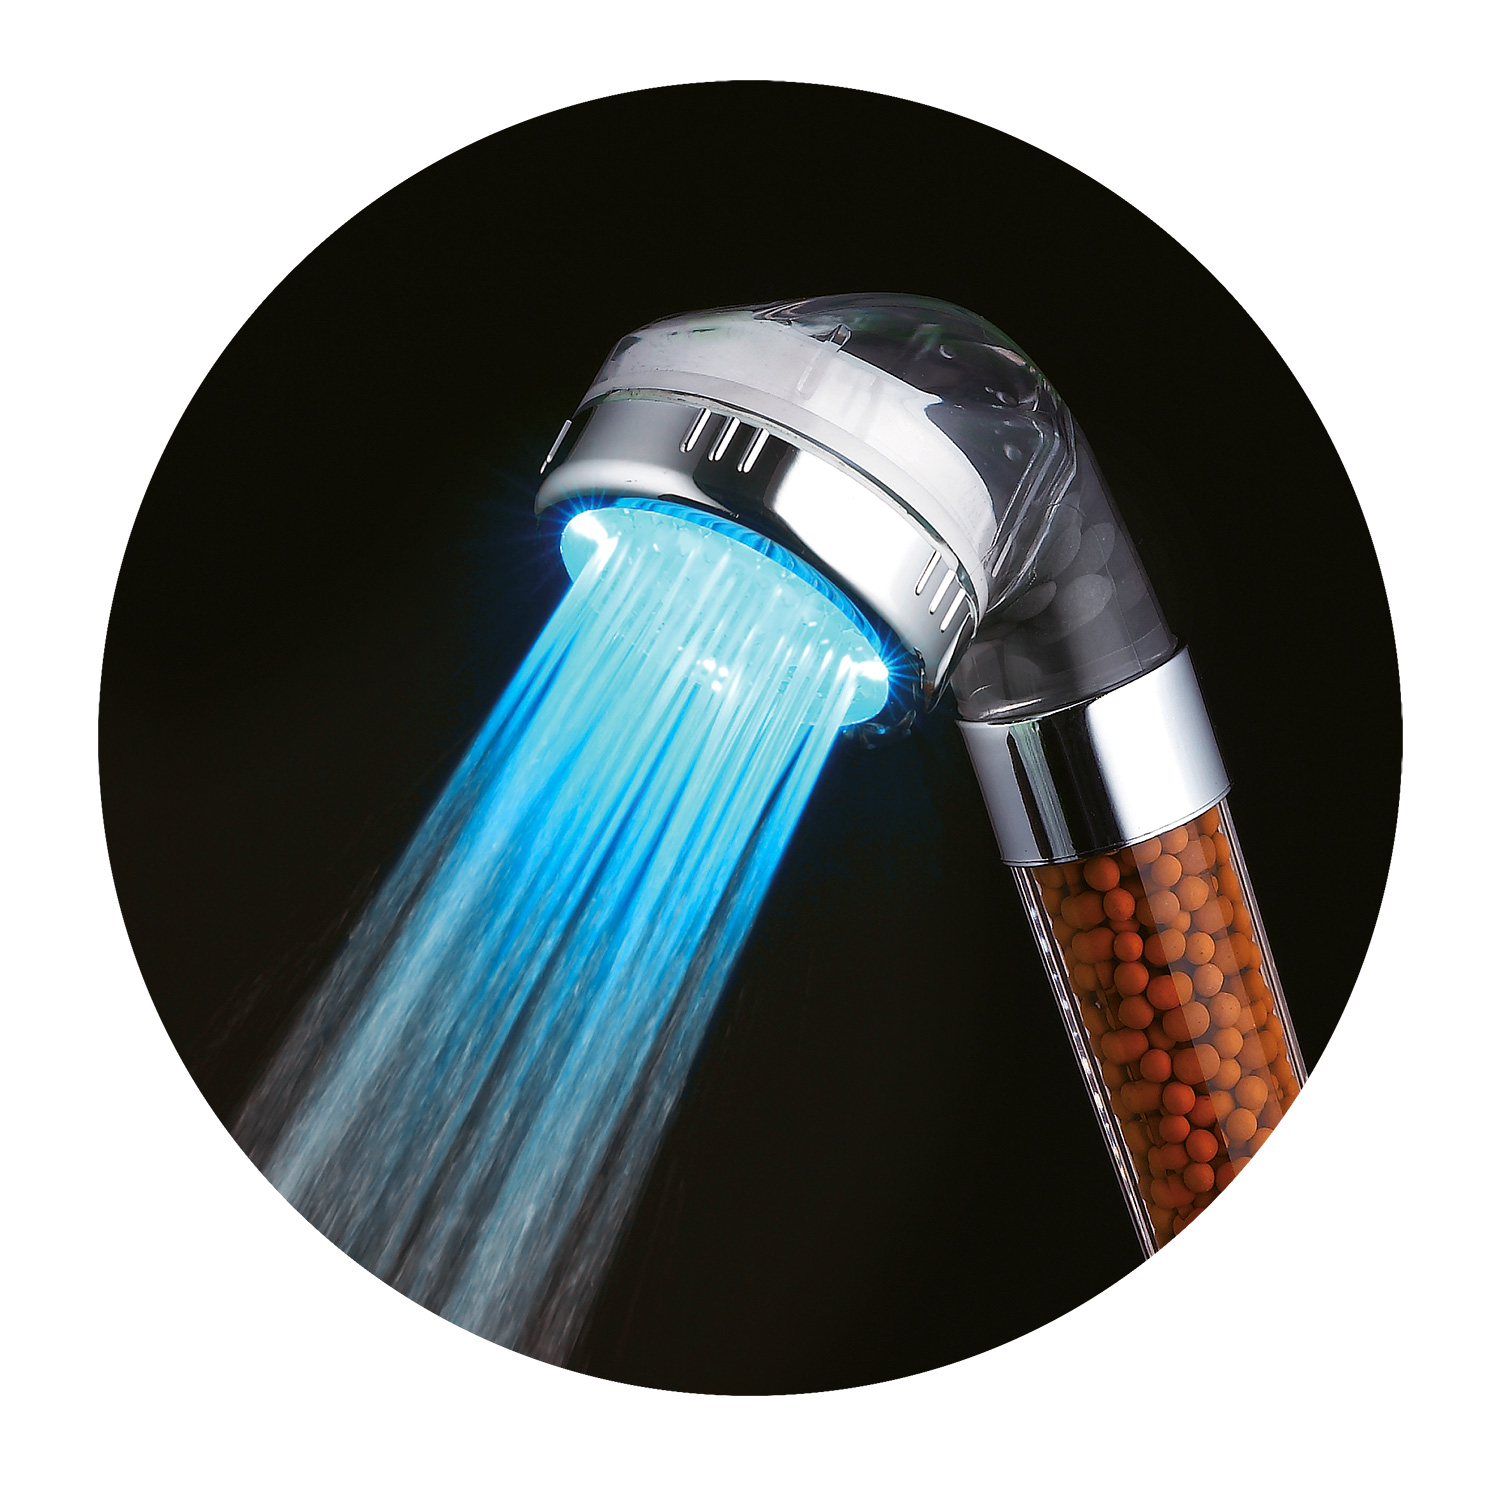 Cabezal de ducha LED con luz de flash de 3 colores Lluvia de 6 pulgadas  Leyfeng Alcachofa de la ducha